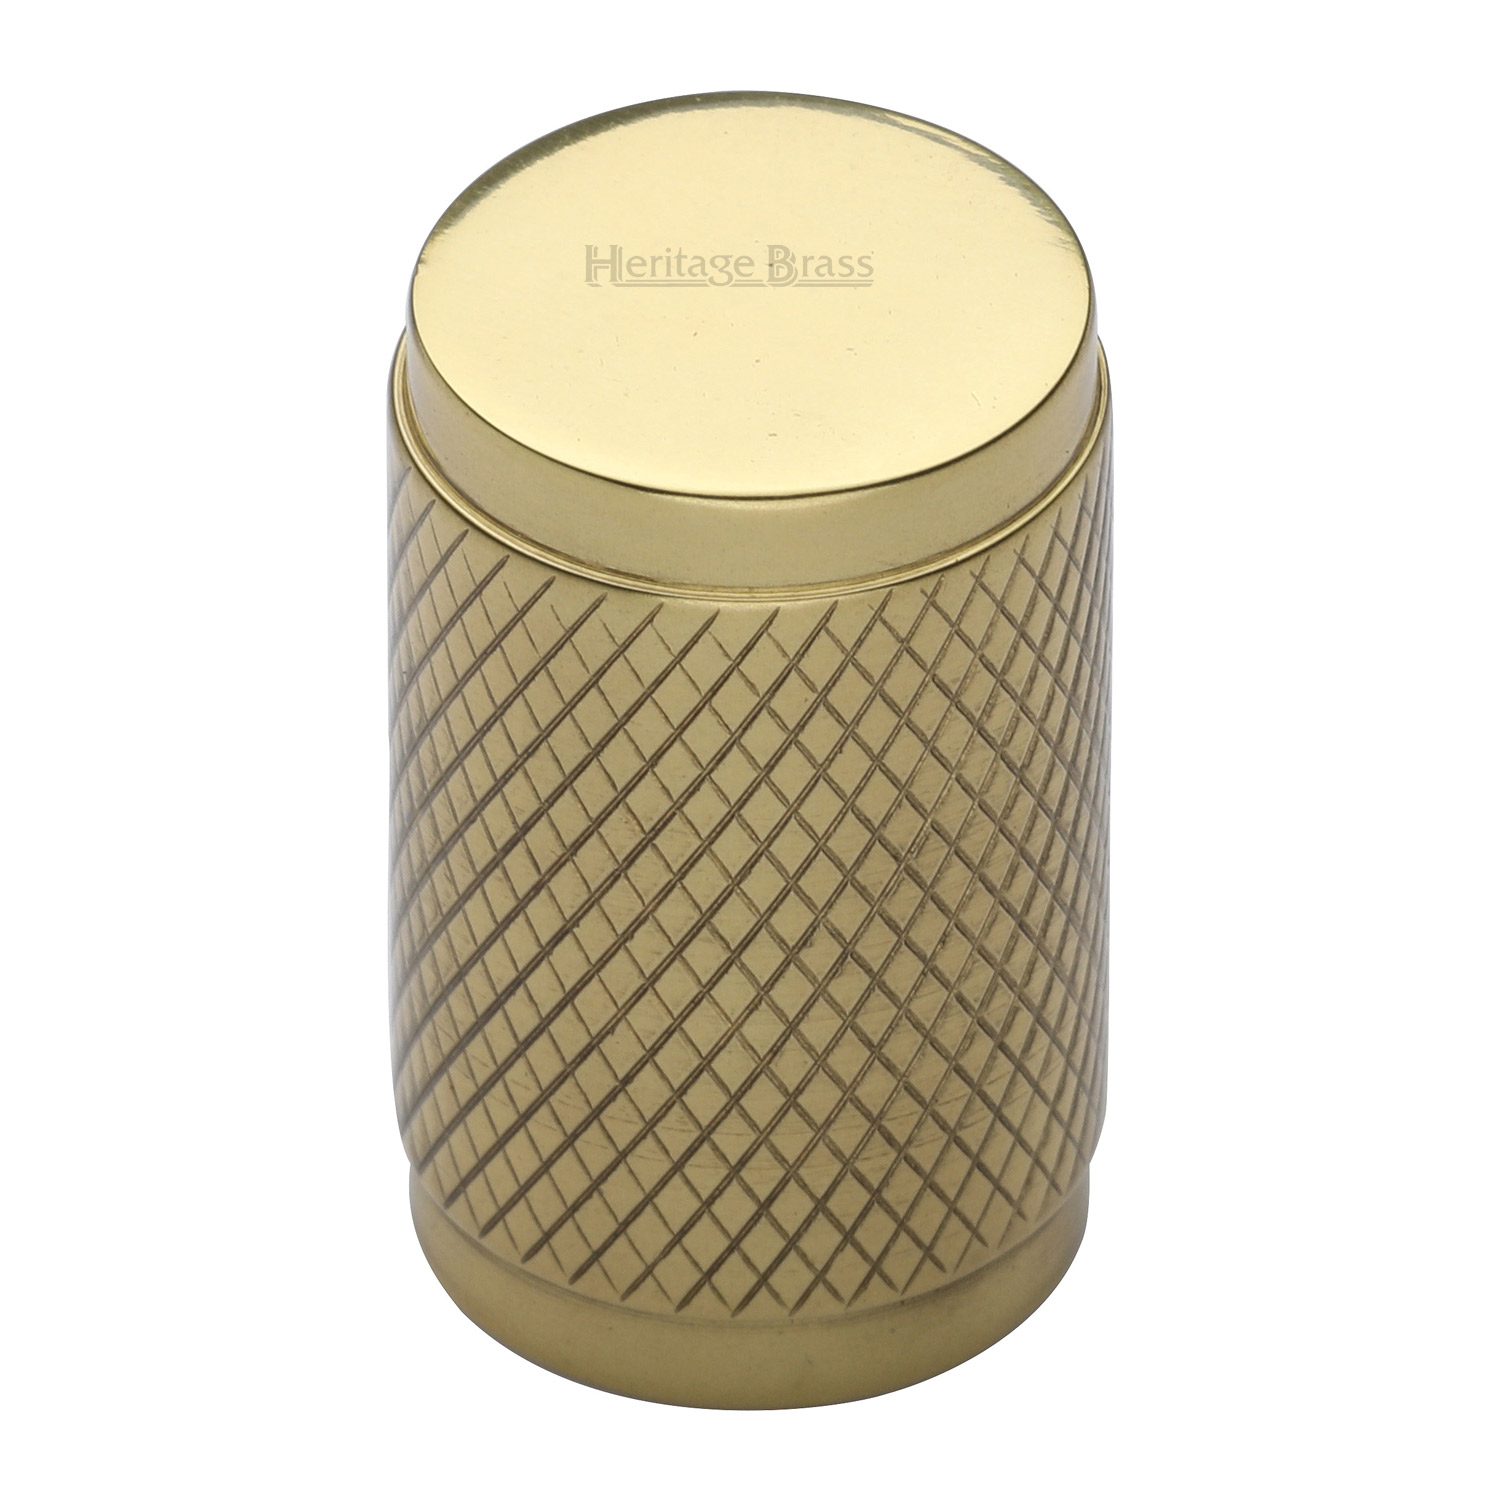 Heritage Brass Cabinet Knob Cylindric Knurled Design 21mm